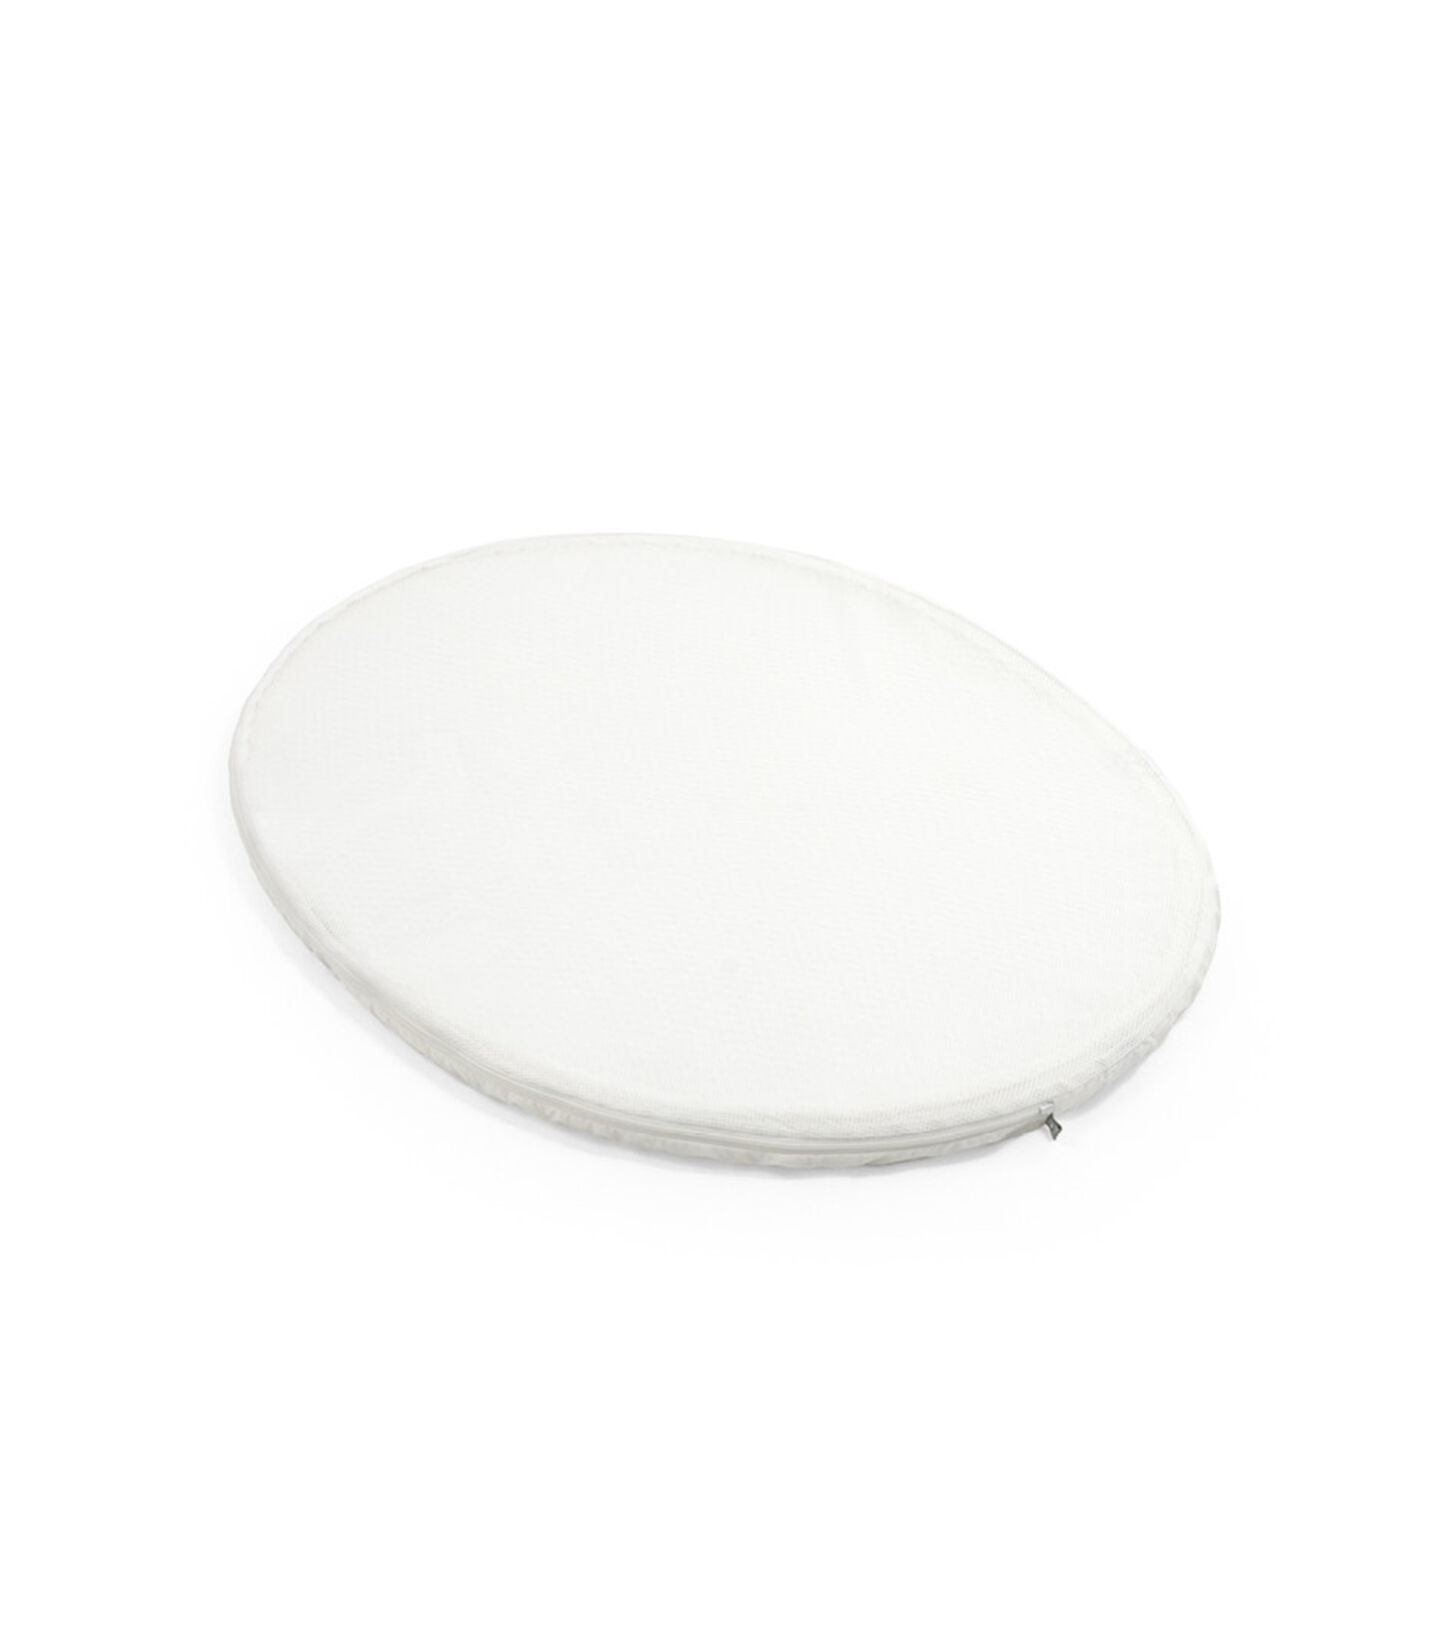 Stokke® Sleepi™ Mini Fitted Sheet White, White, mainview view 2